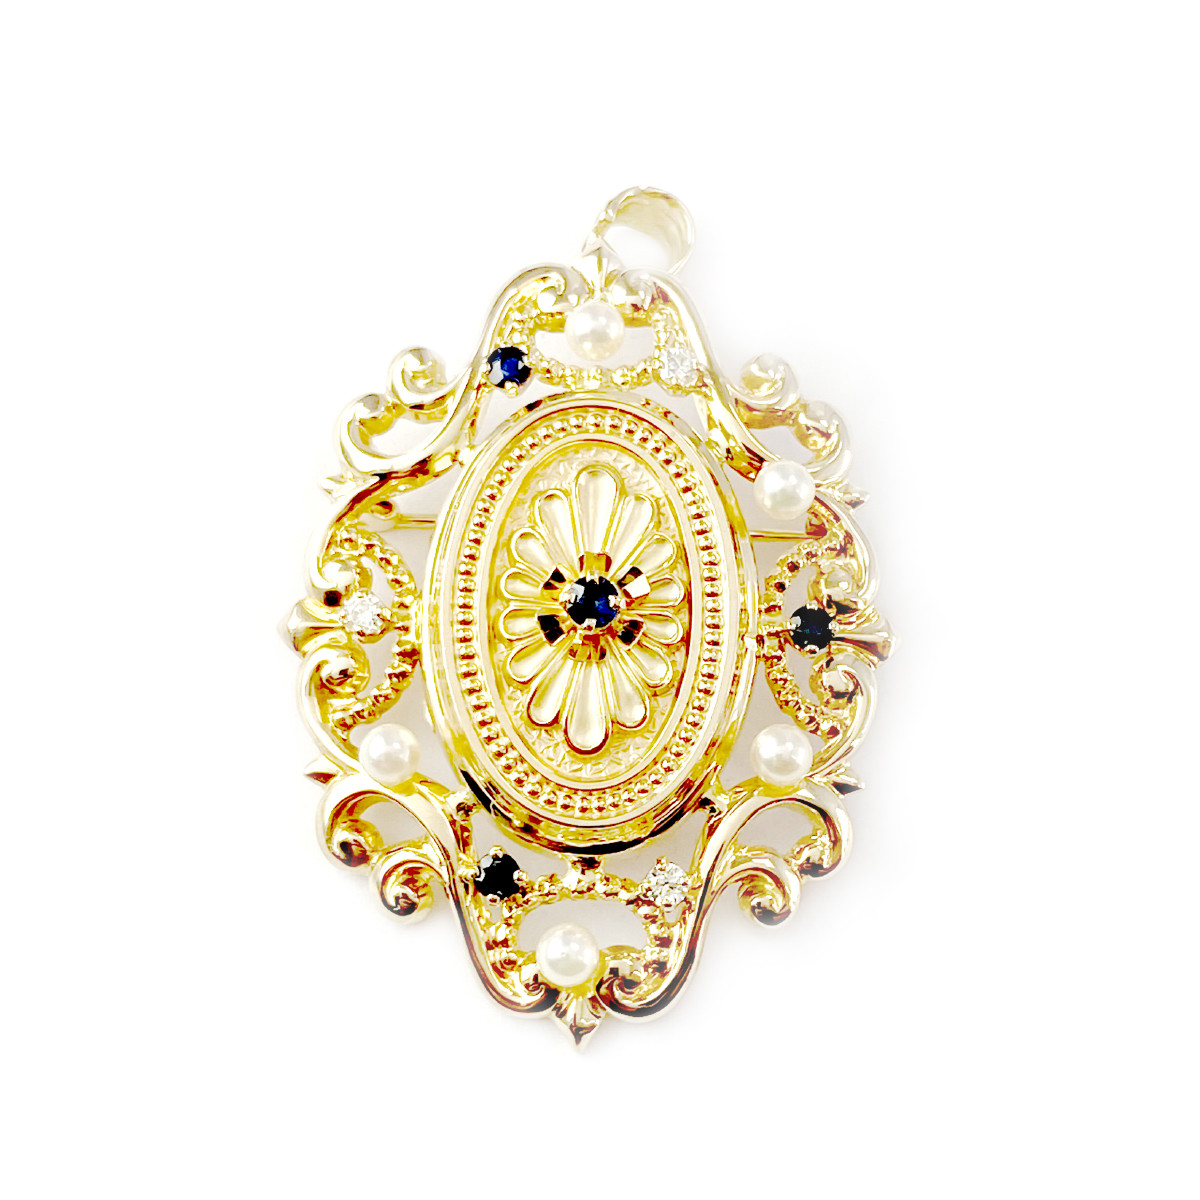 Broche pendentif d'occasion or 750 jaune saphirs diamants perles de culture